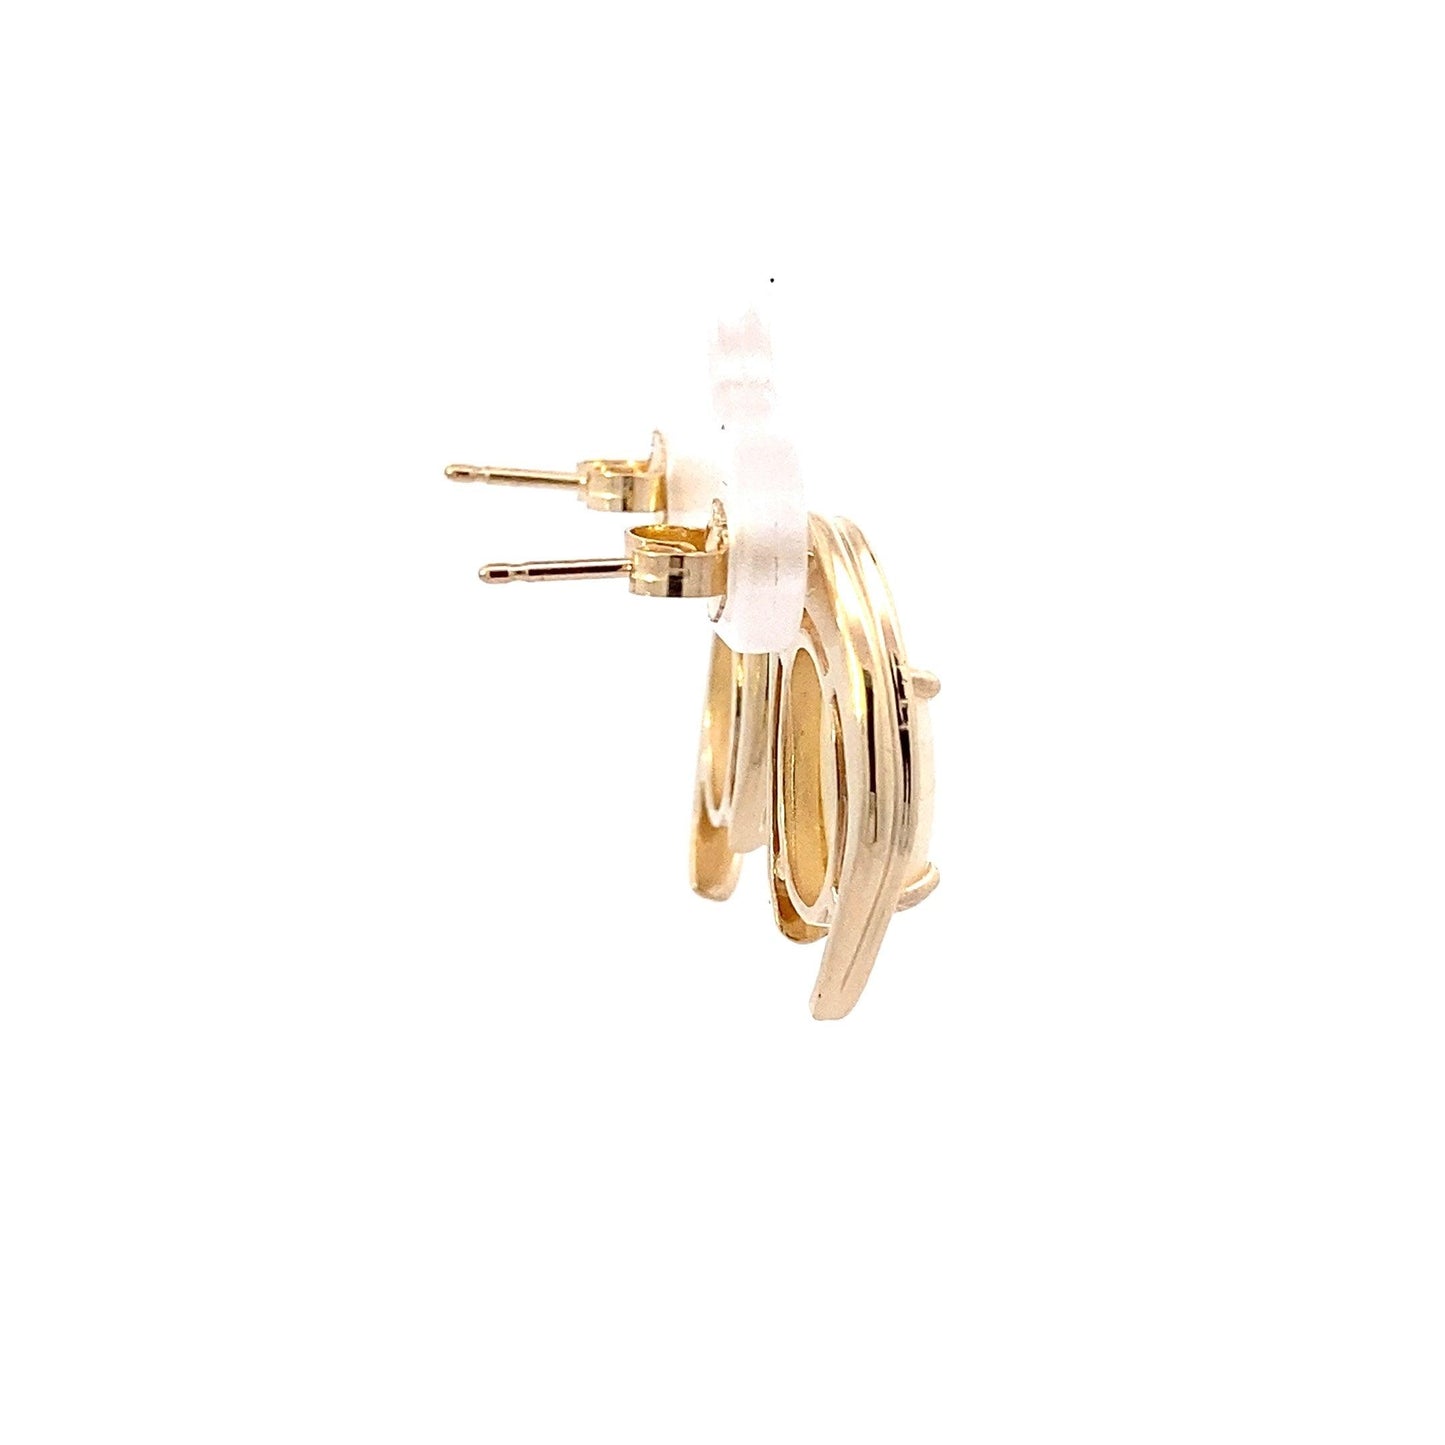 14K Yellow Gold Oval Opal Earrings - ipawnishop.com